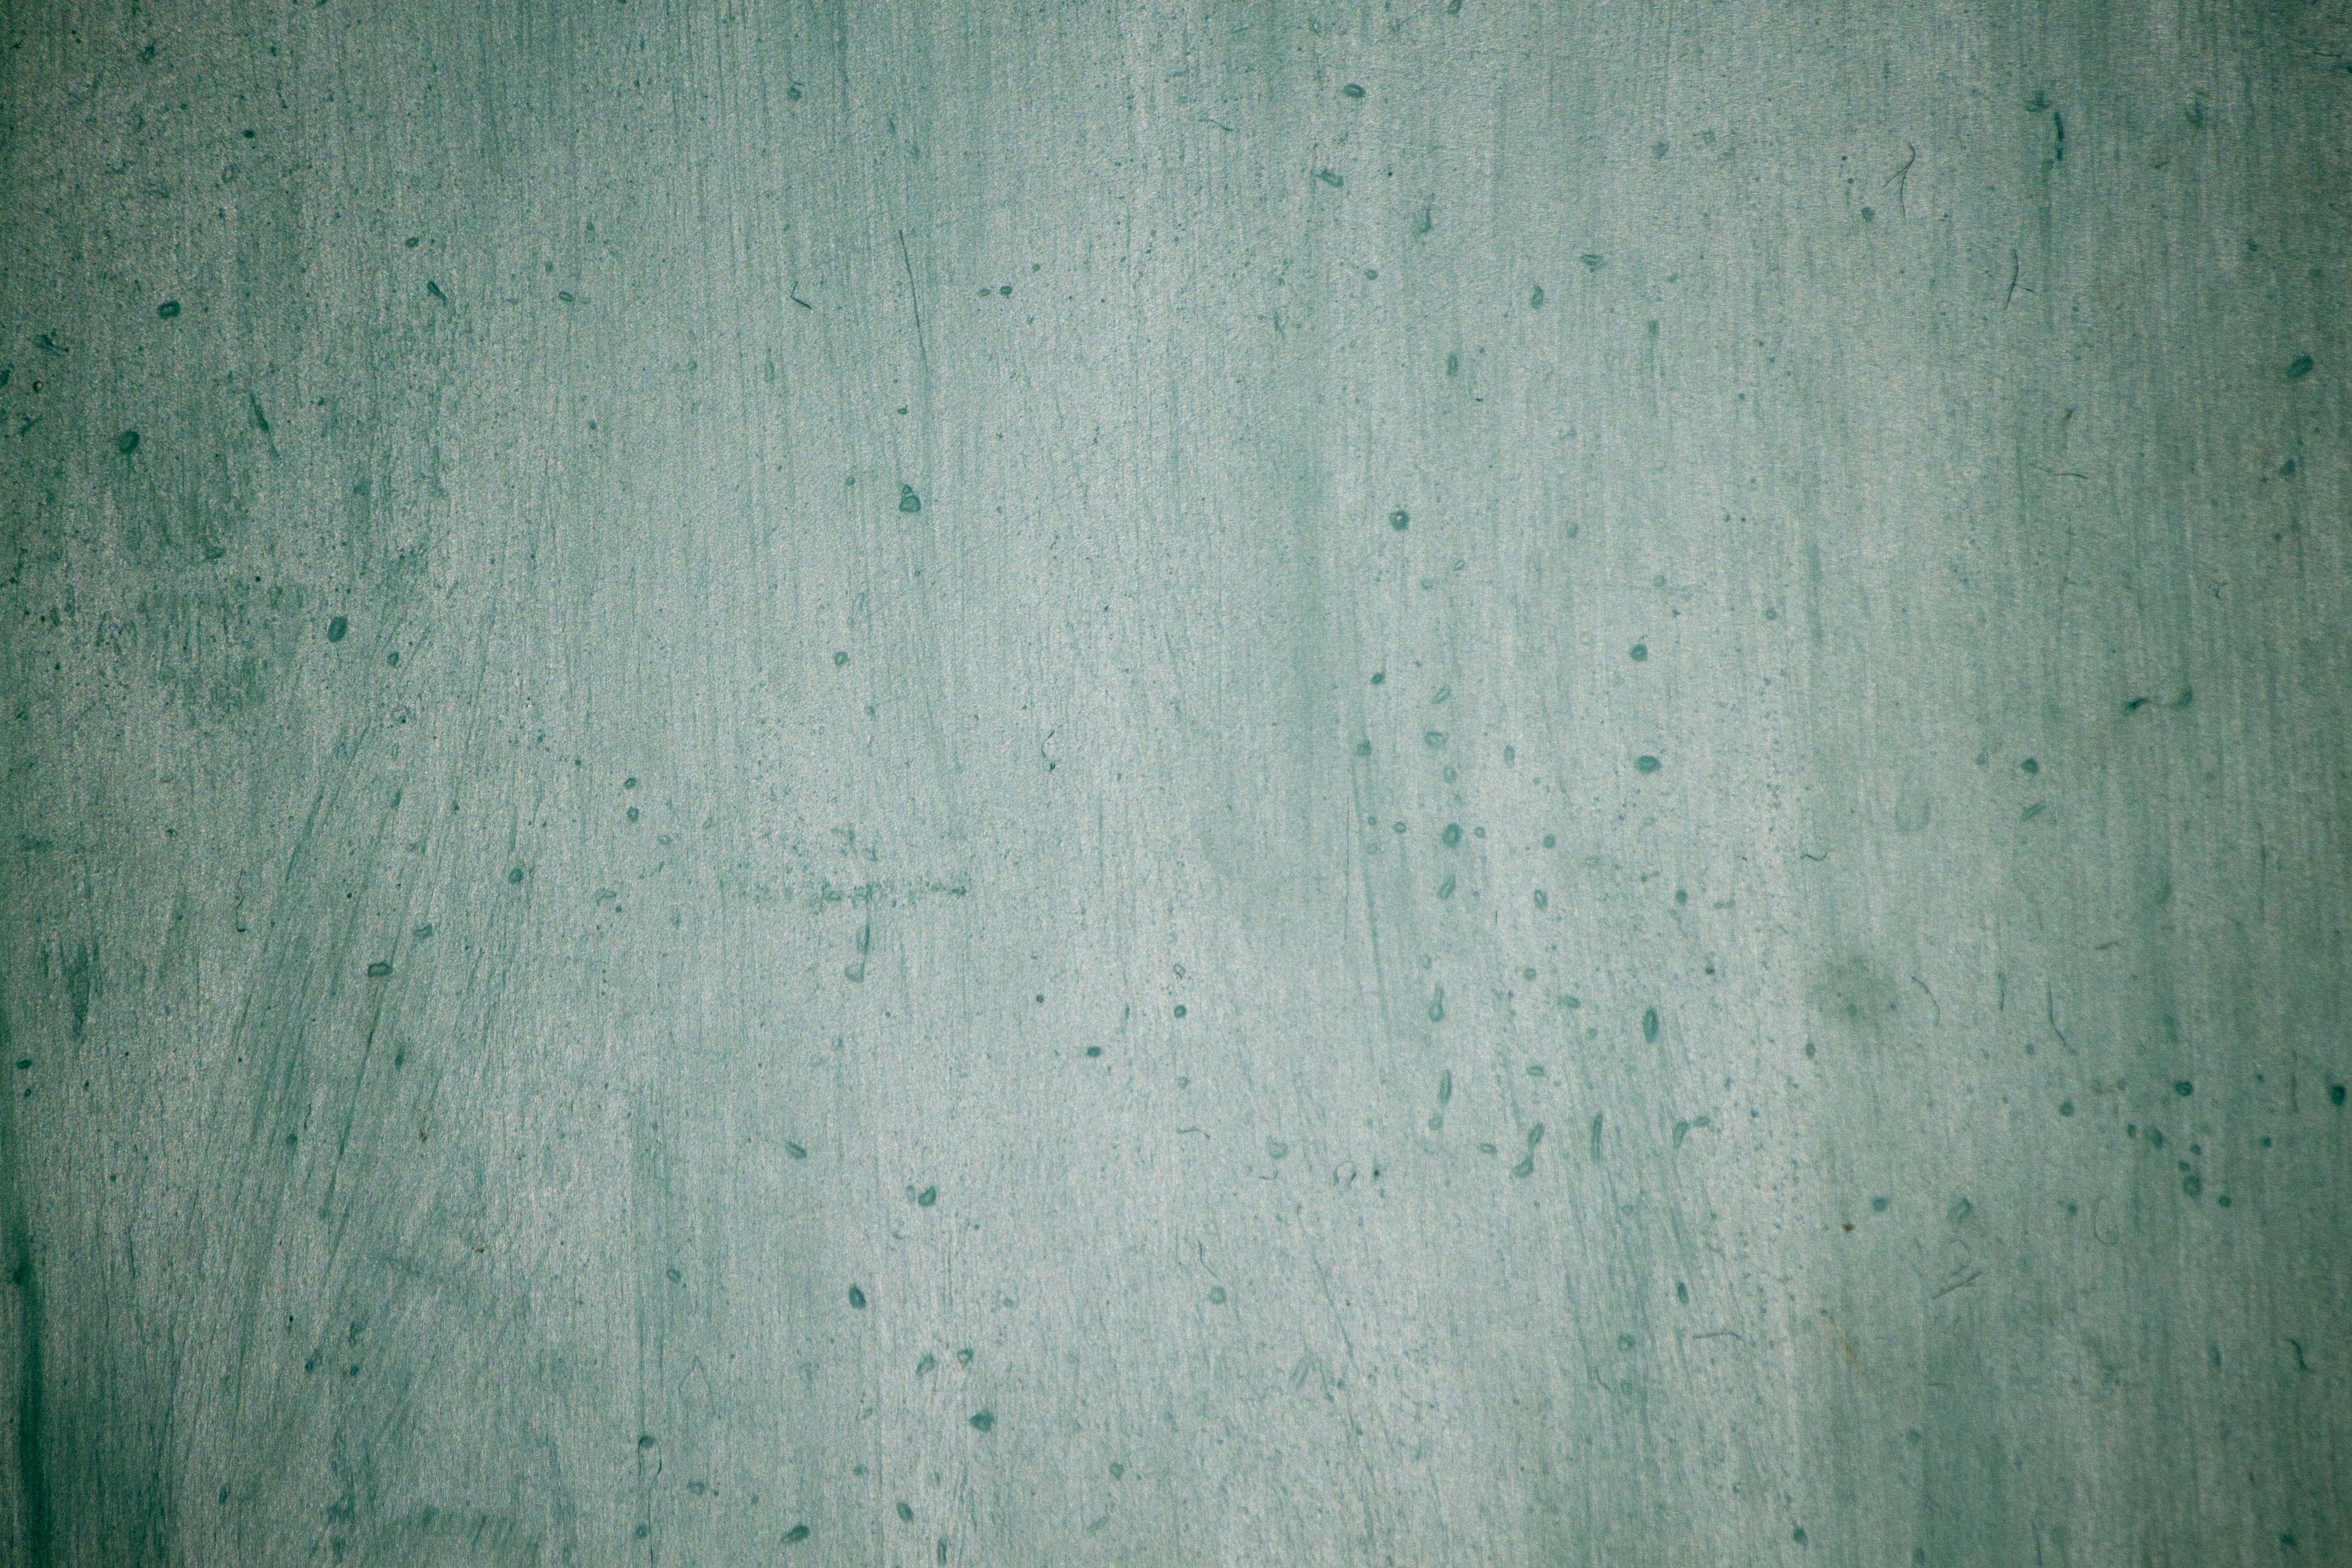 Green wall texture photo